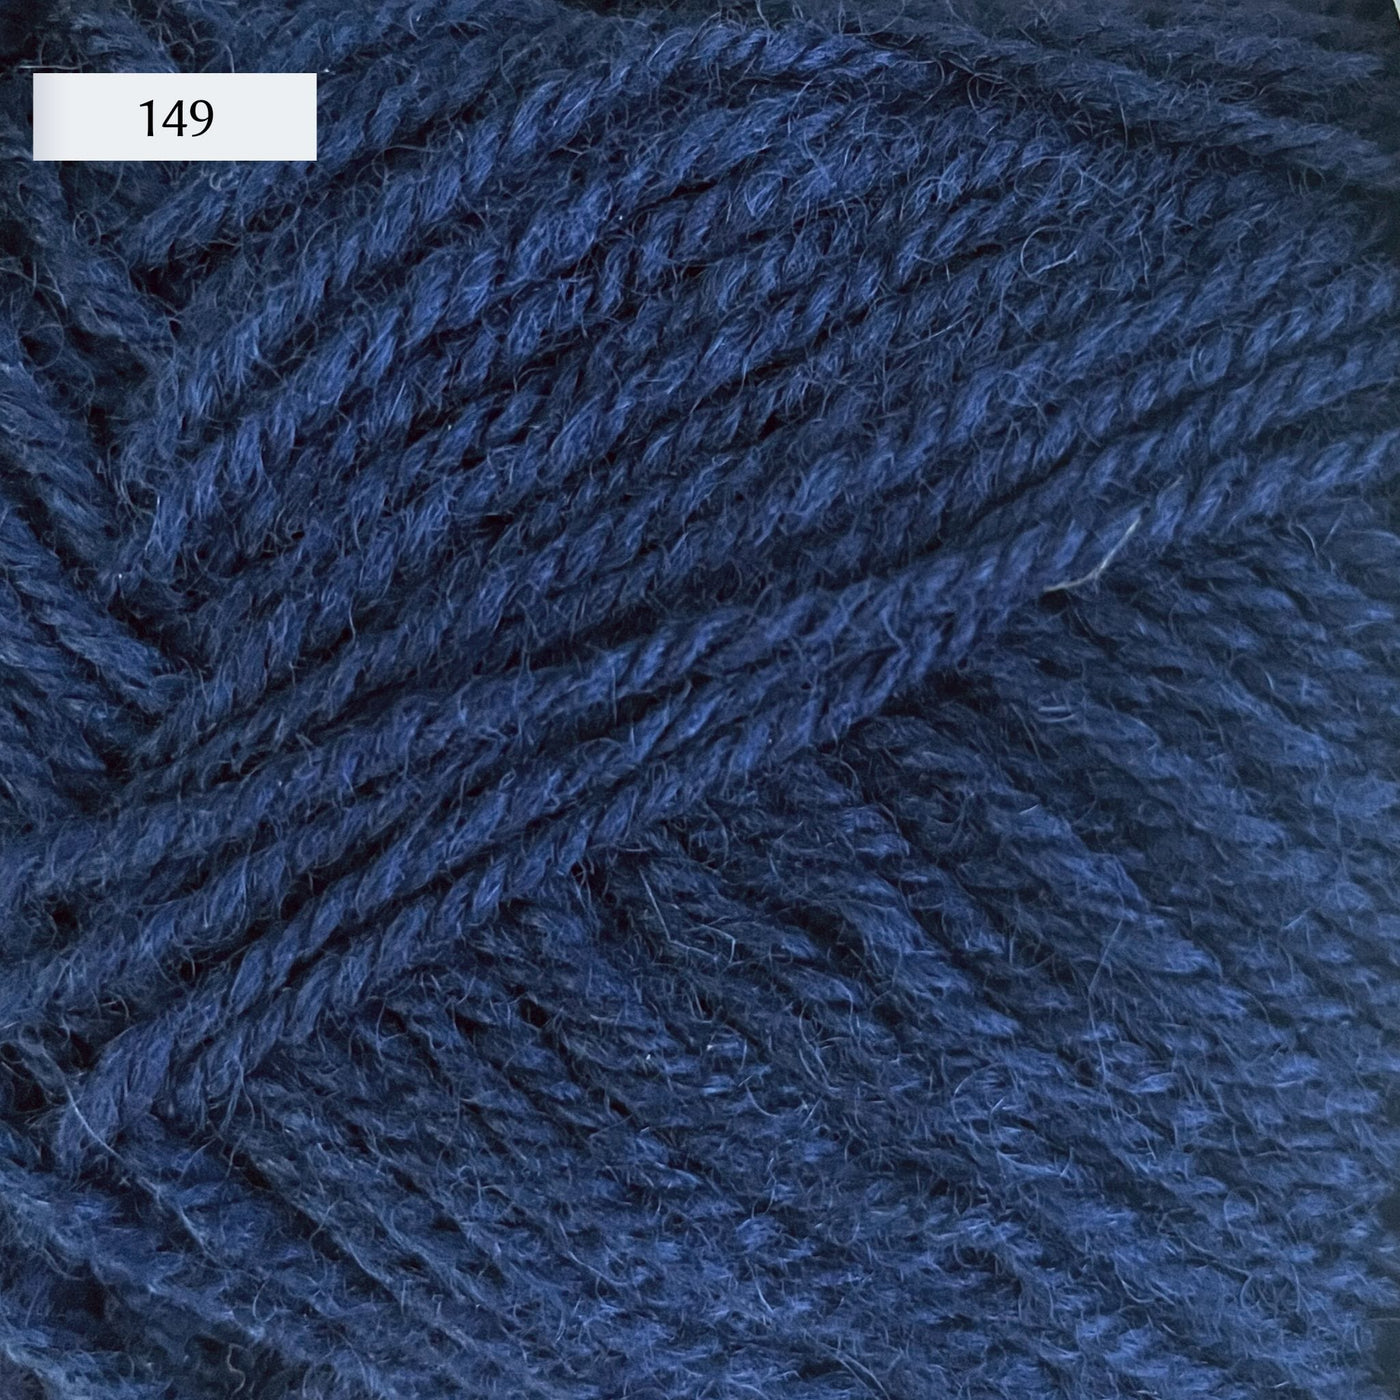 Yarn  Vlnika - yarn, wool warehouse - buy all of your yarn wool, needles,  and other knitting supplies online